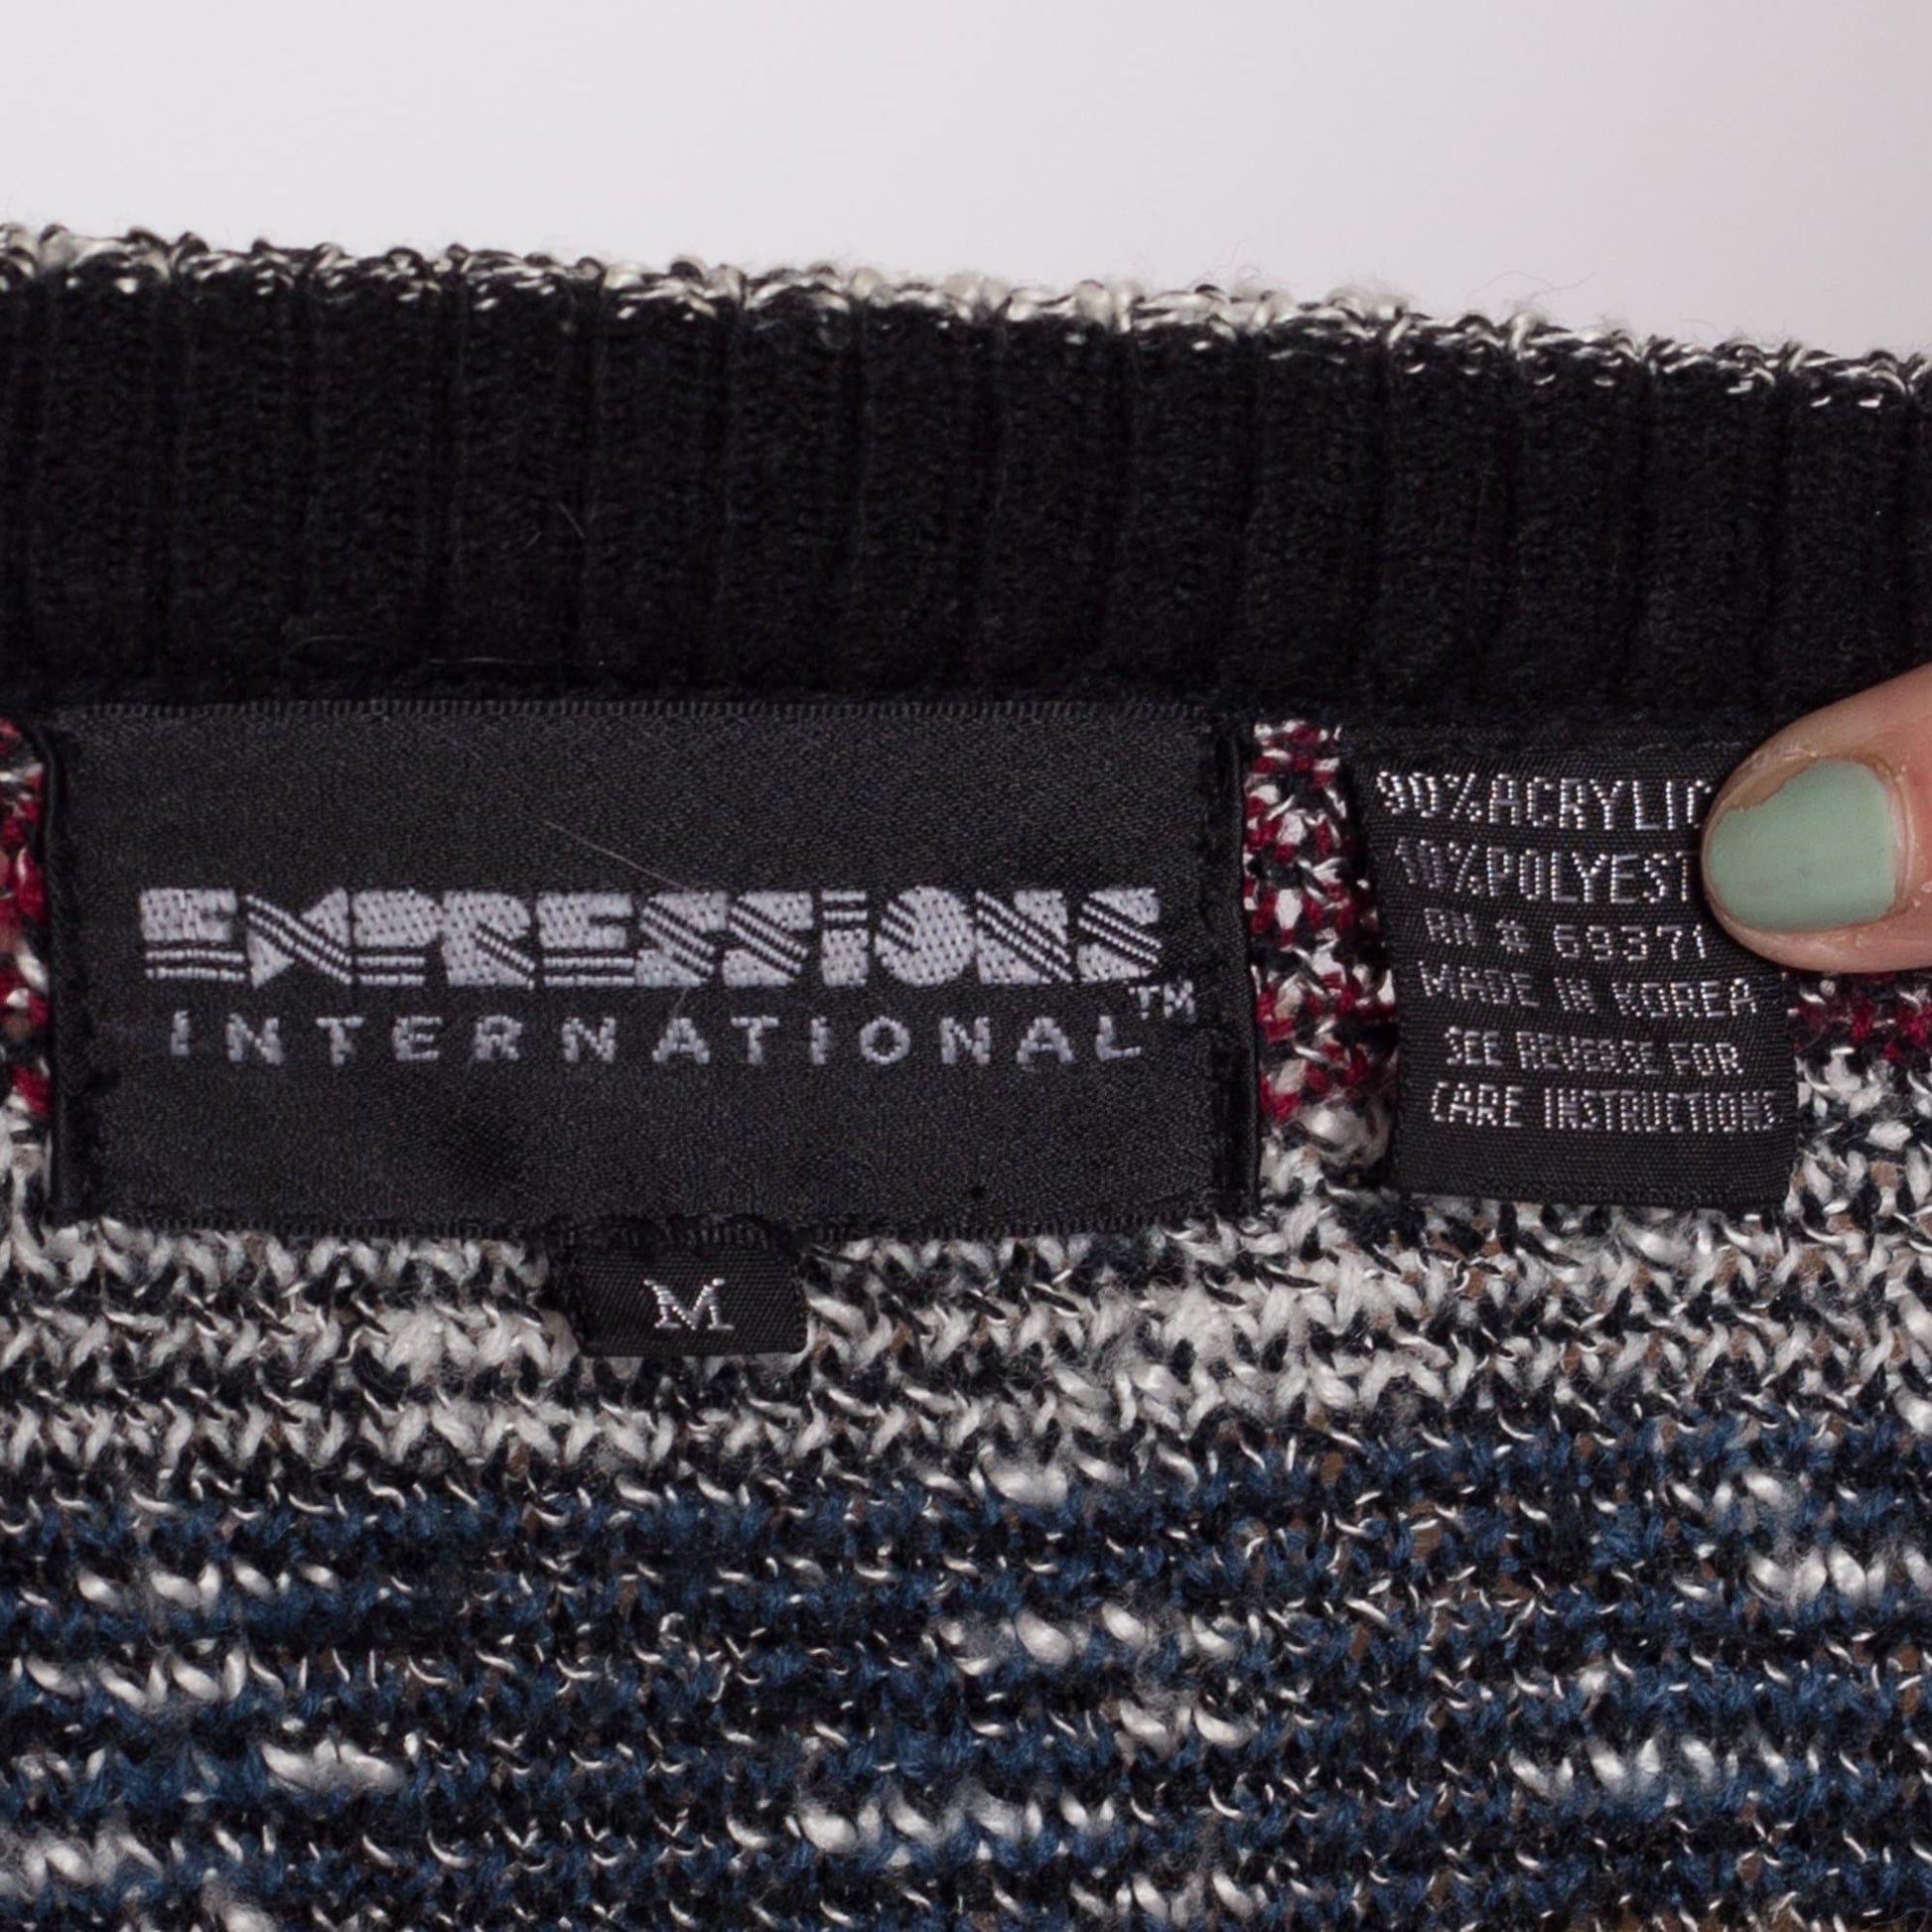 Med-Lrg 80s Slouchy Argyle Knit Cardigan Unisex | Vintage V Neck Oversize Button Up Grandpa Sweater